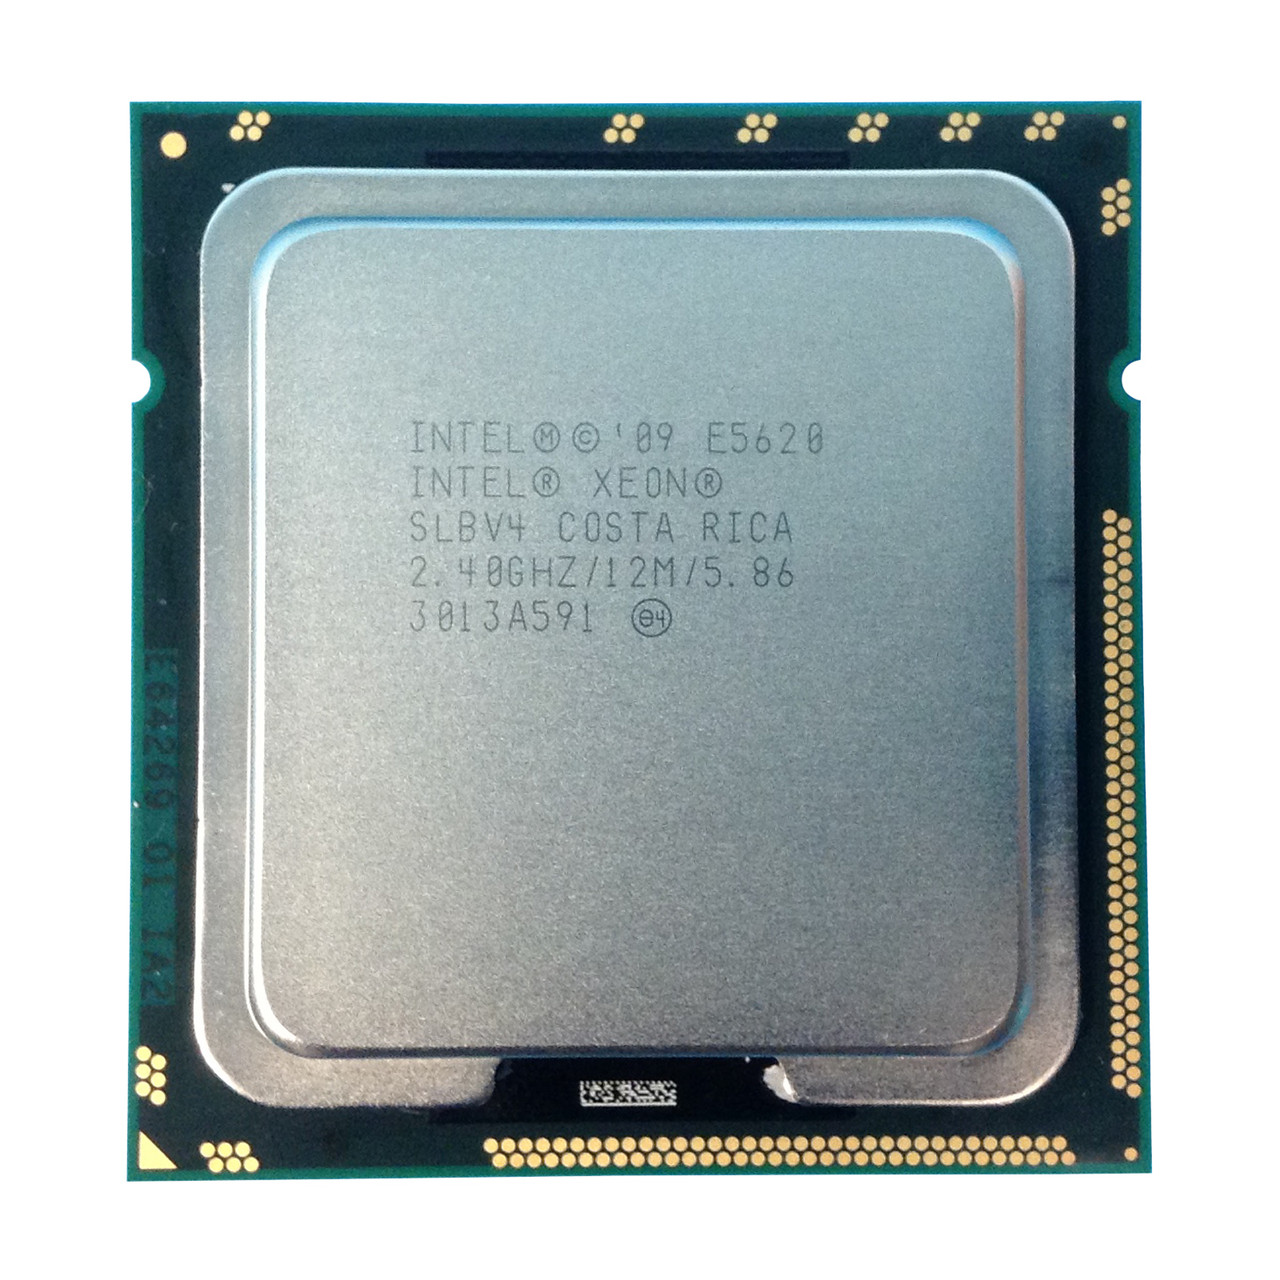 Intel SLBV4 XeonE5620 QC 2.40GHz 12MB 5.86GTs Processor